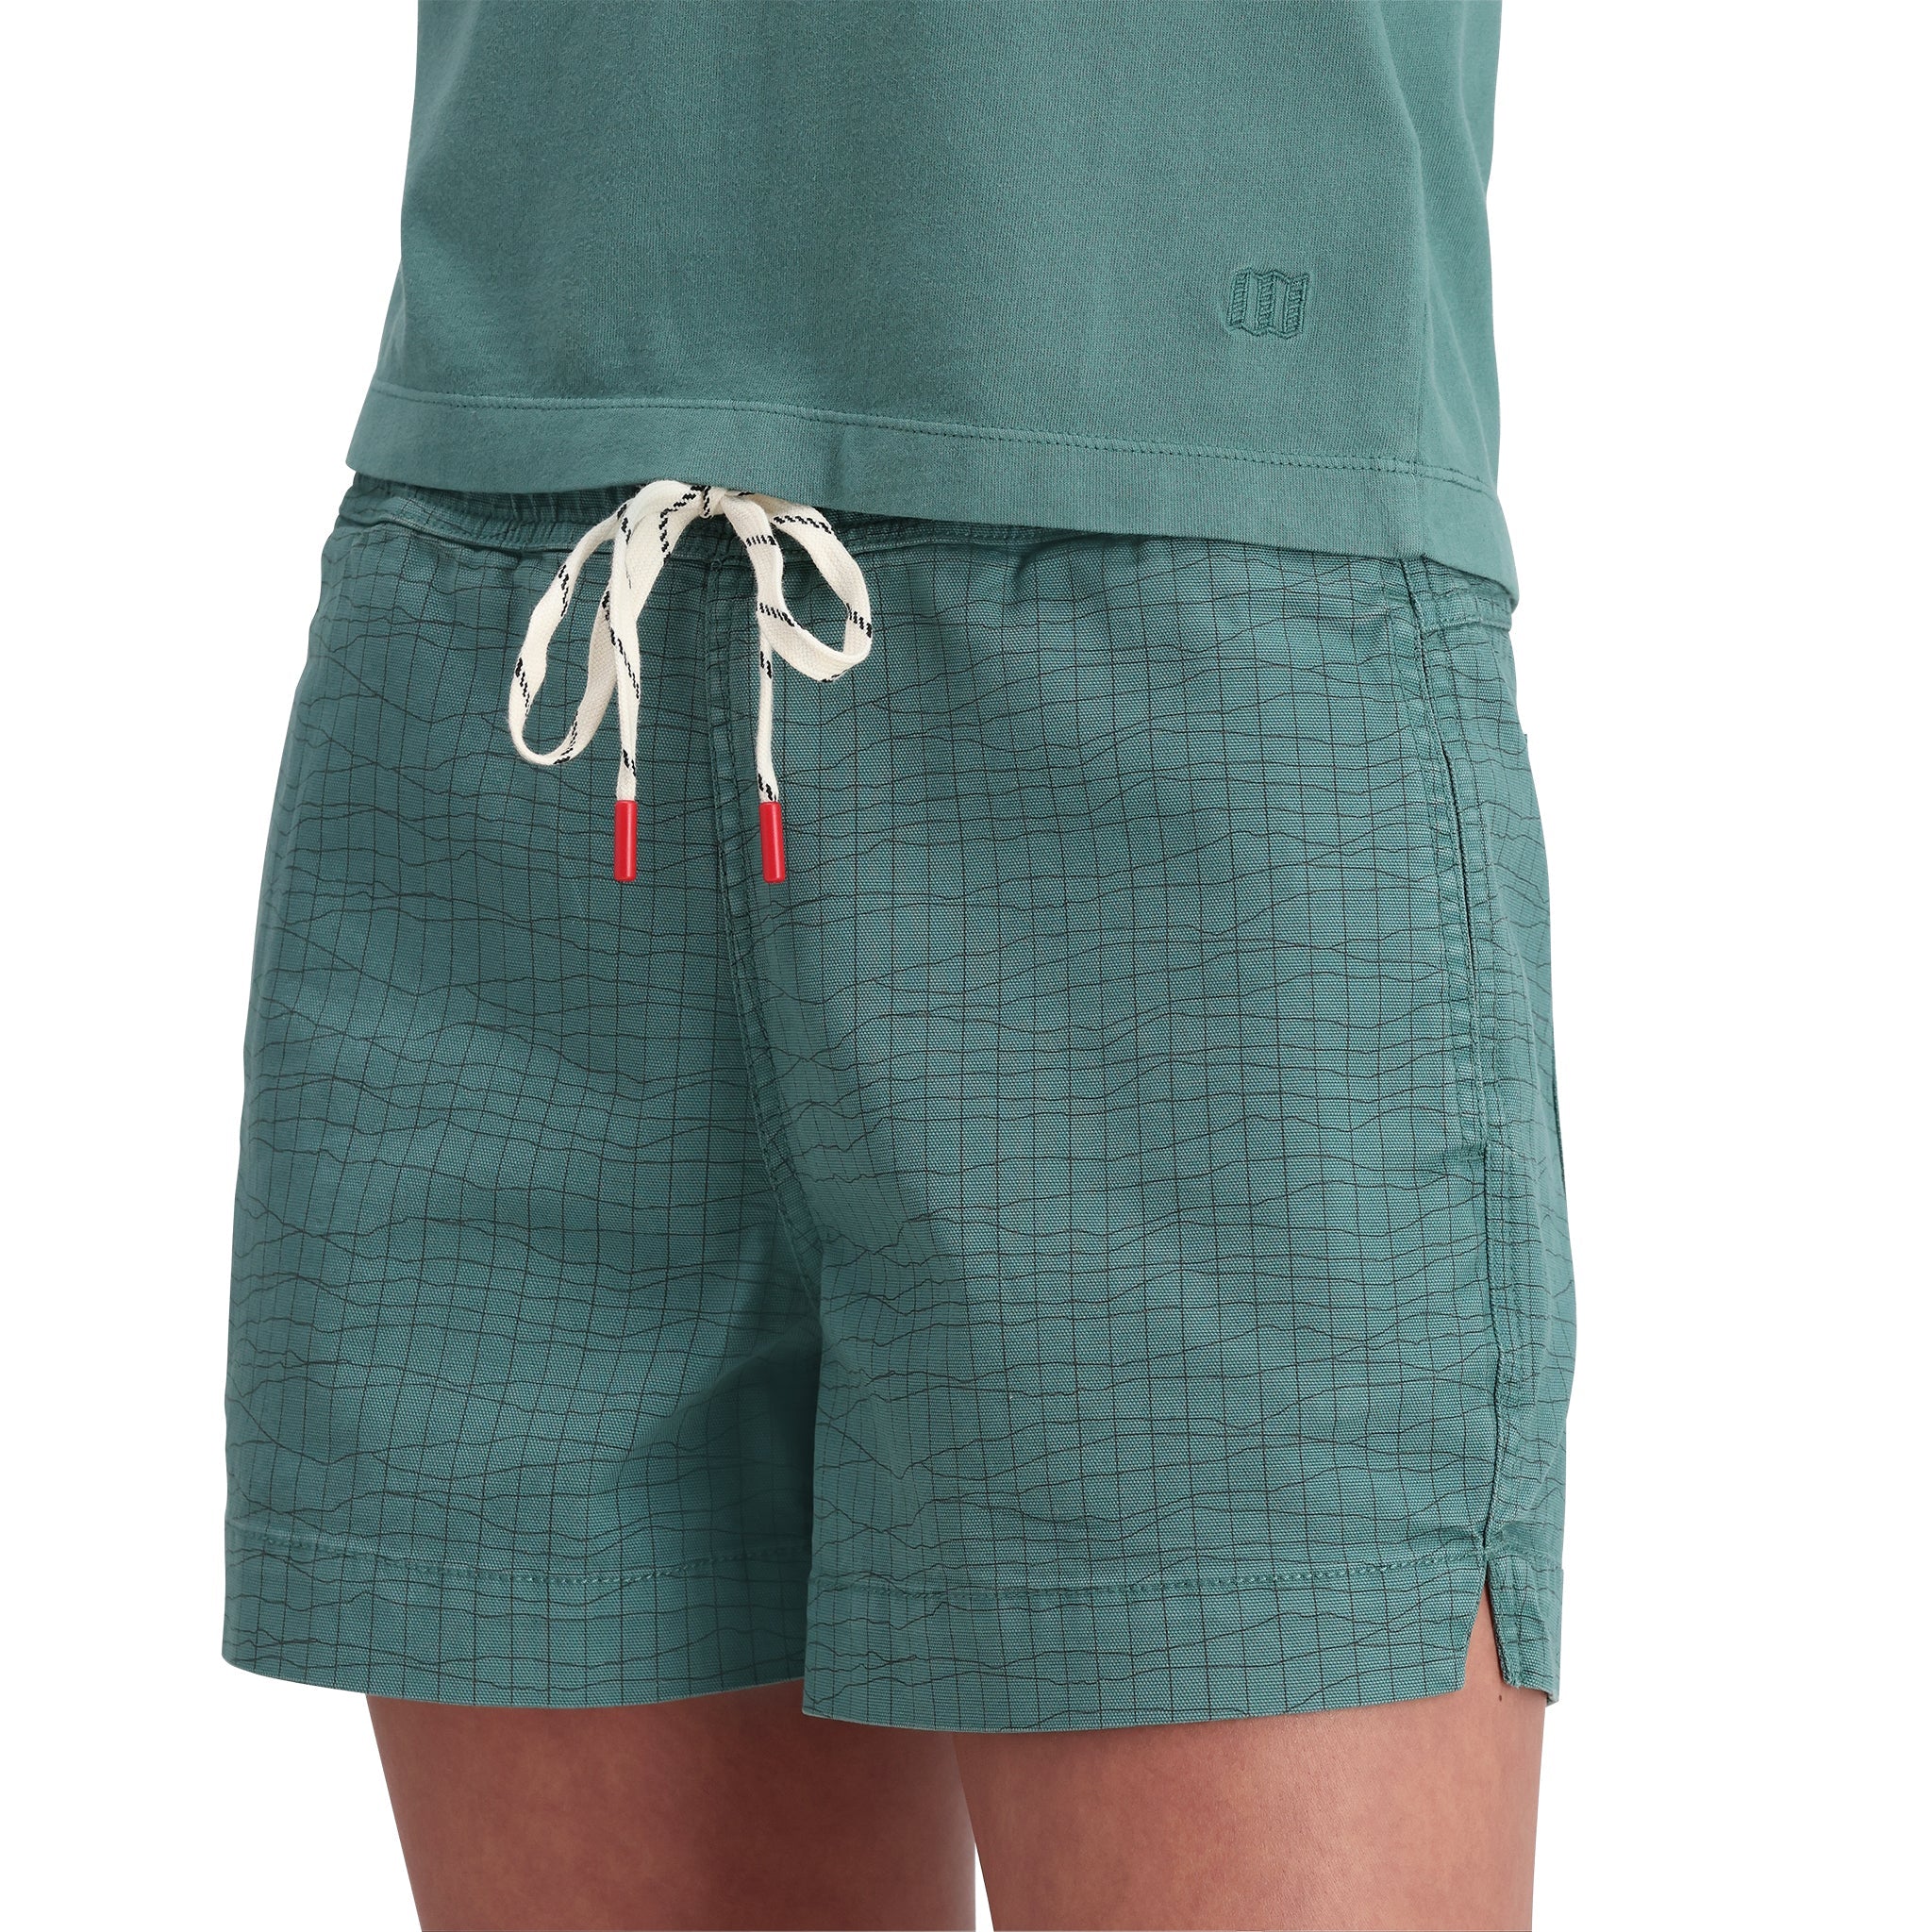 Detail shot of Topo Designs Dirt Shorts - Women's in "Sea Pine Terrain"